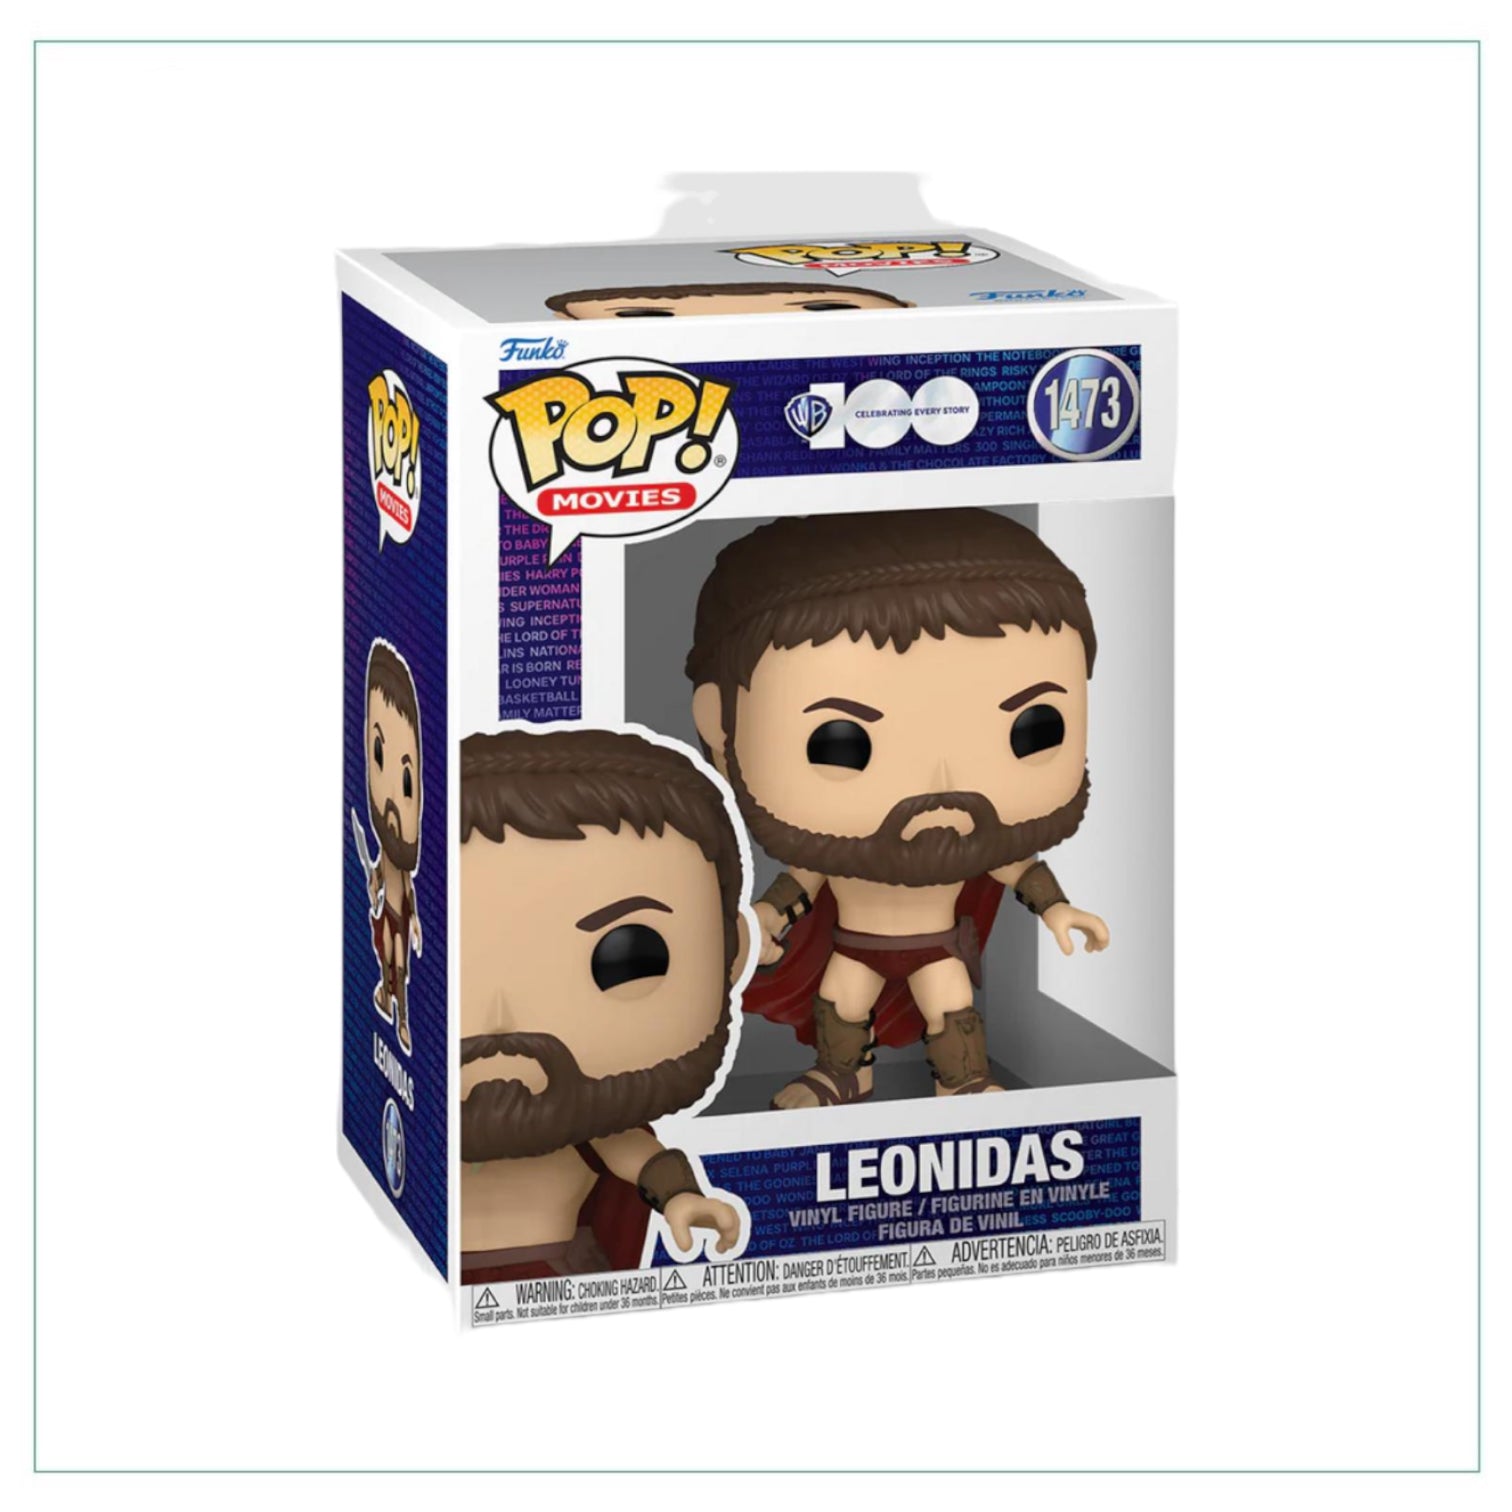 Leonidas #1473 Funko Pop! - WB100